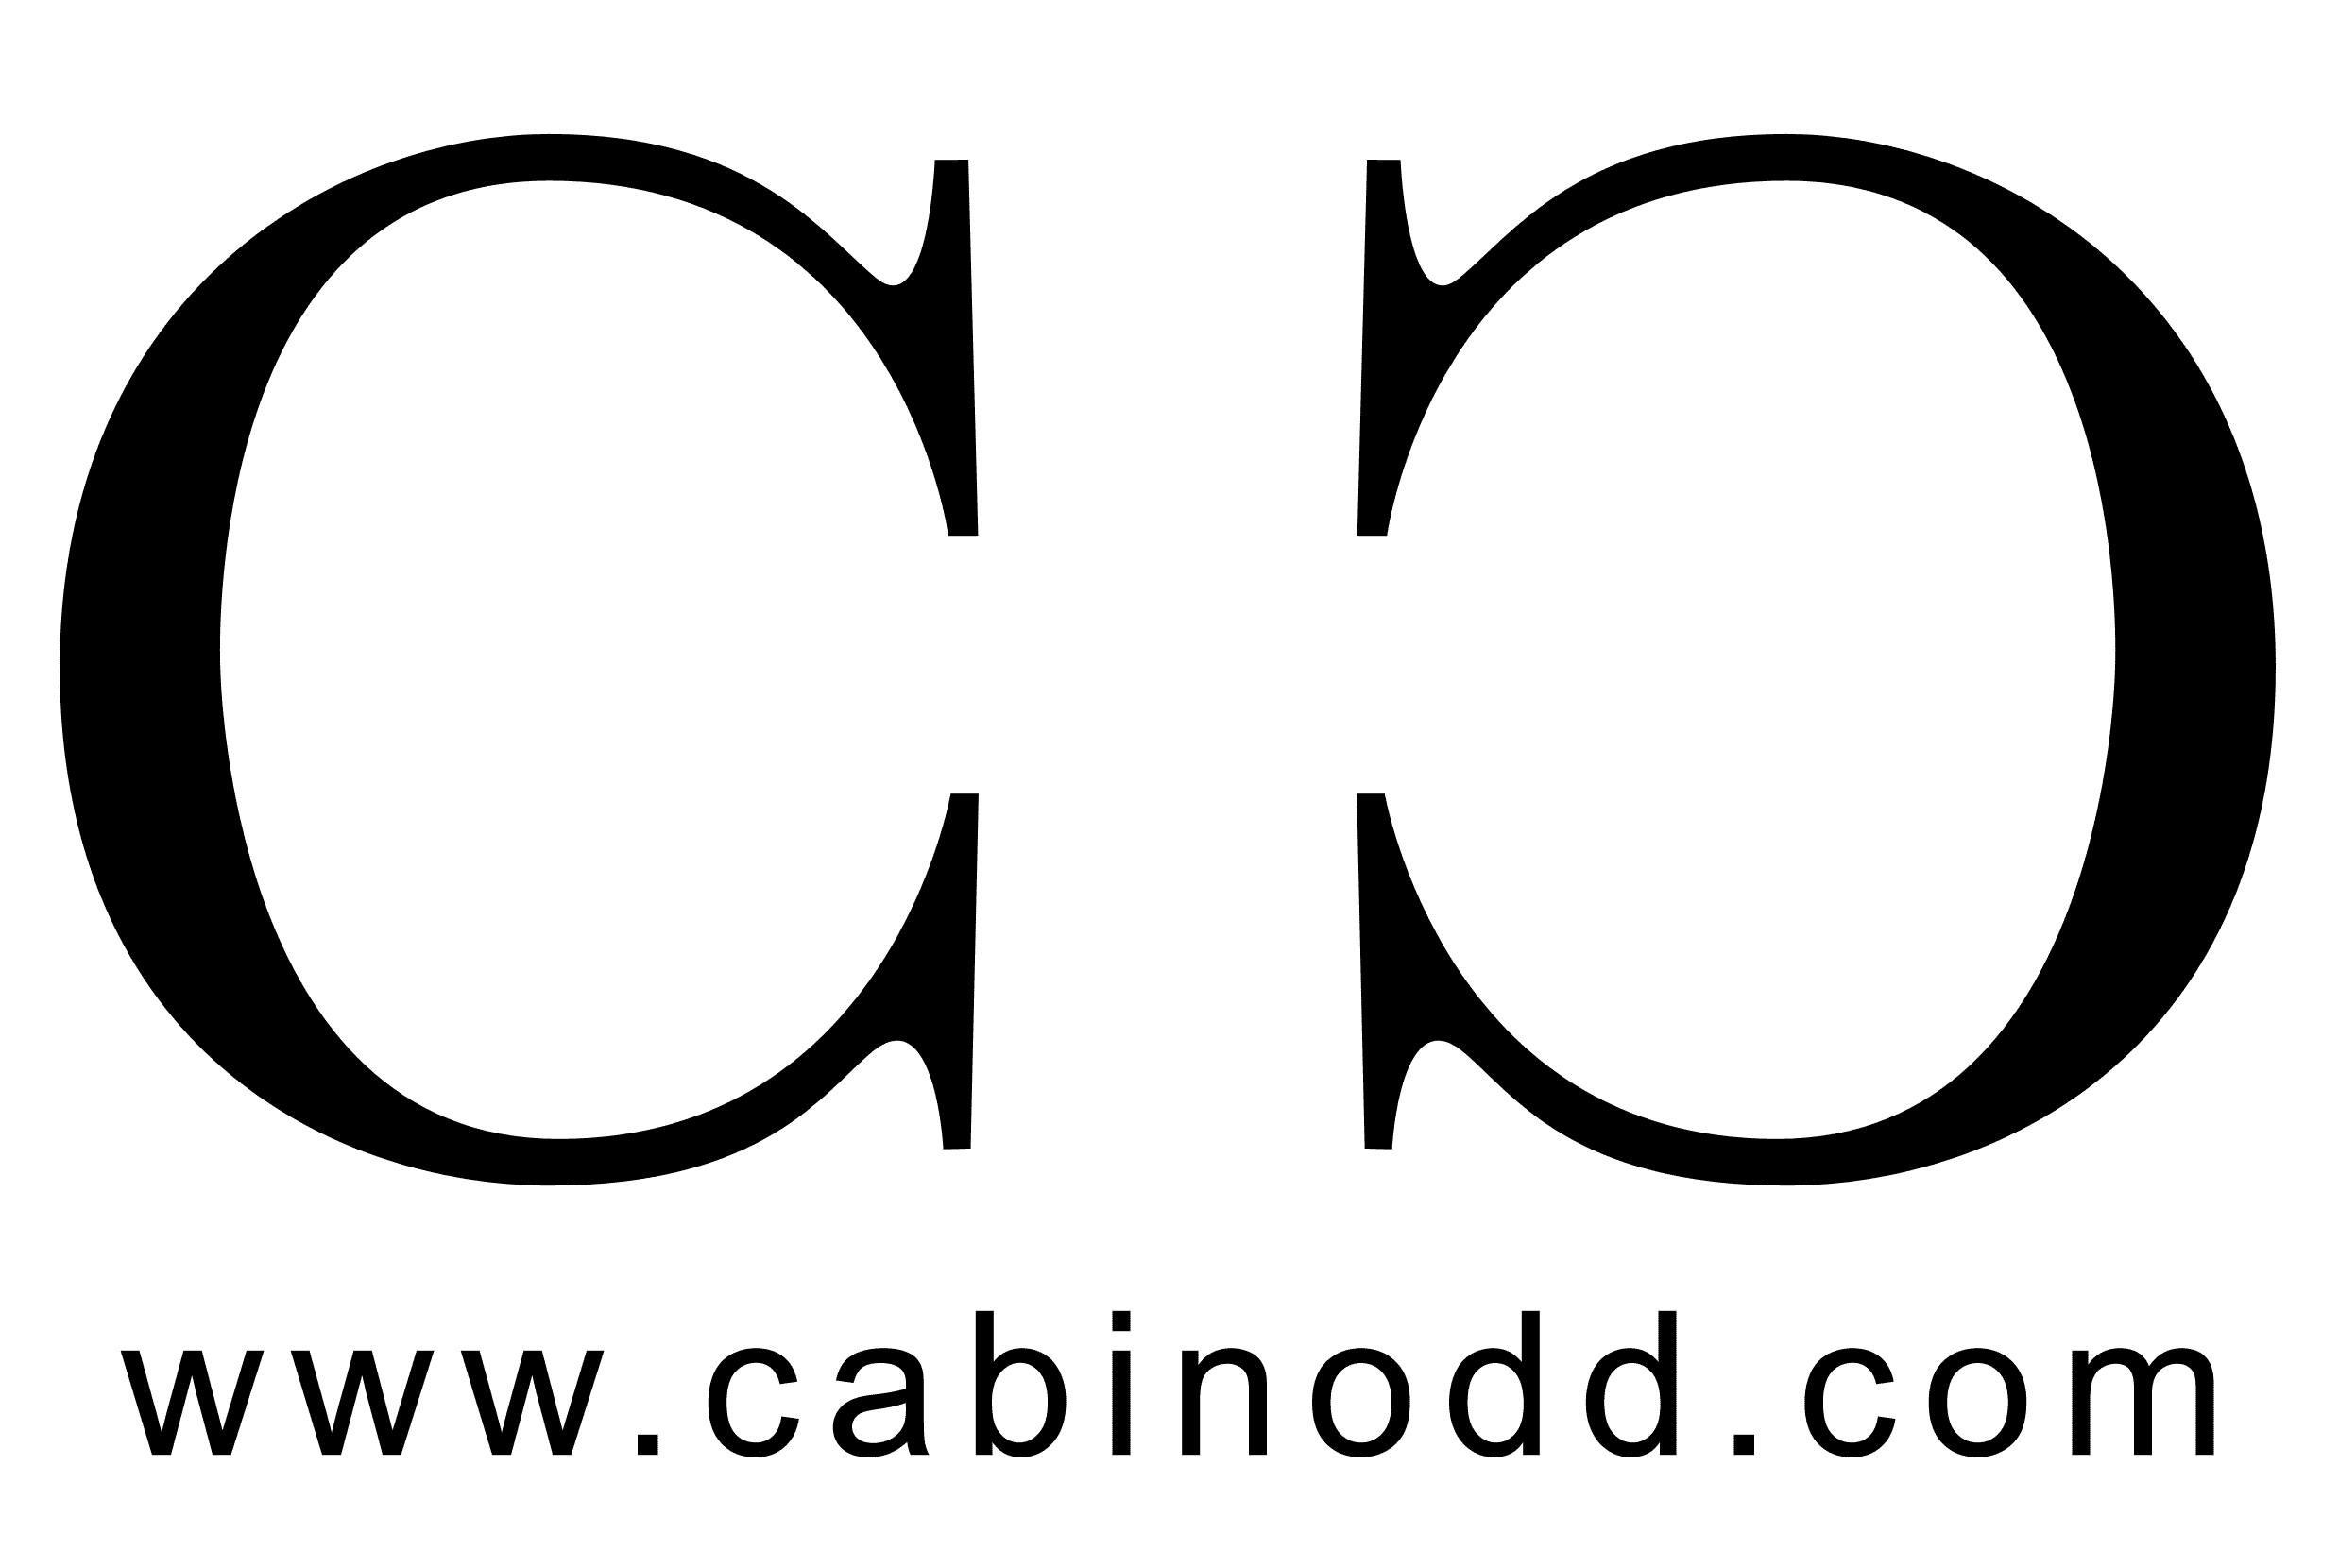 www.cabinodd.com